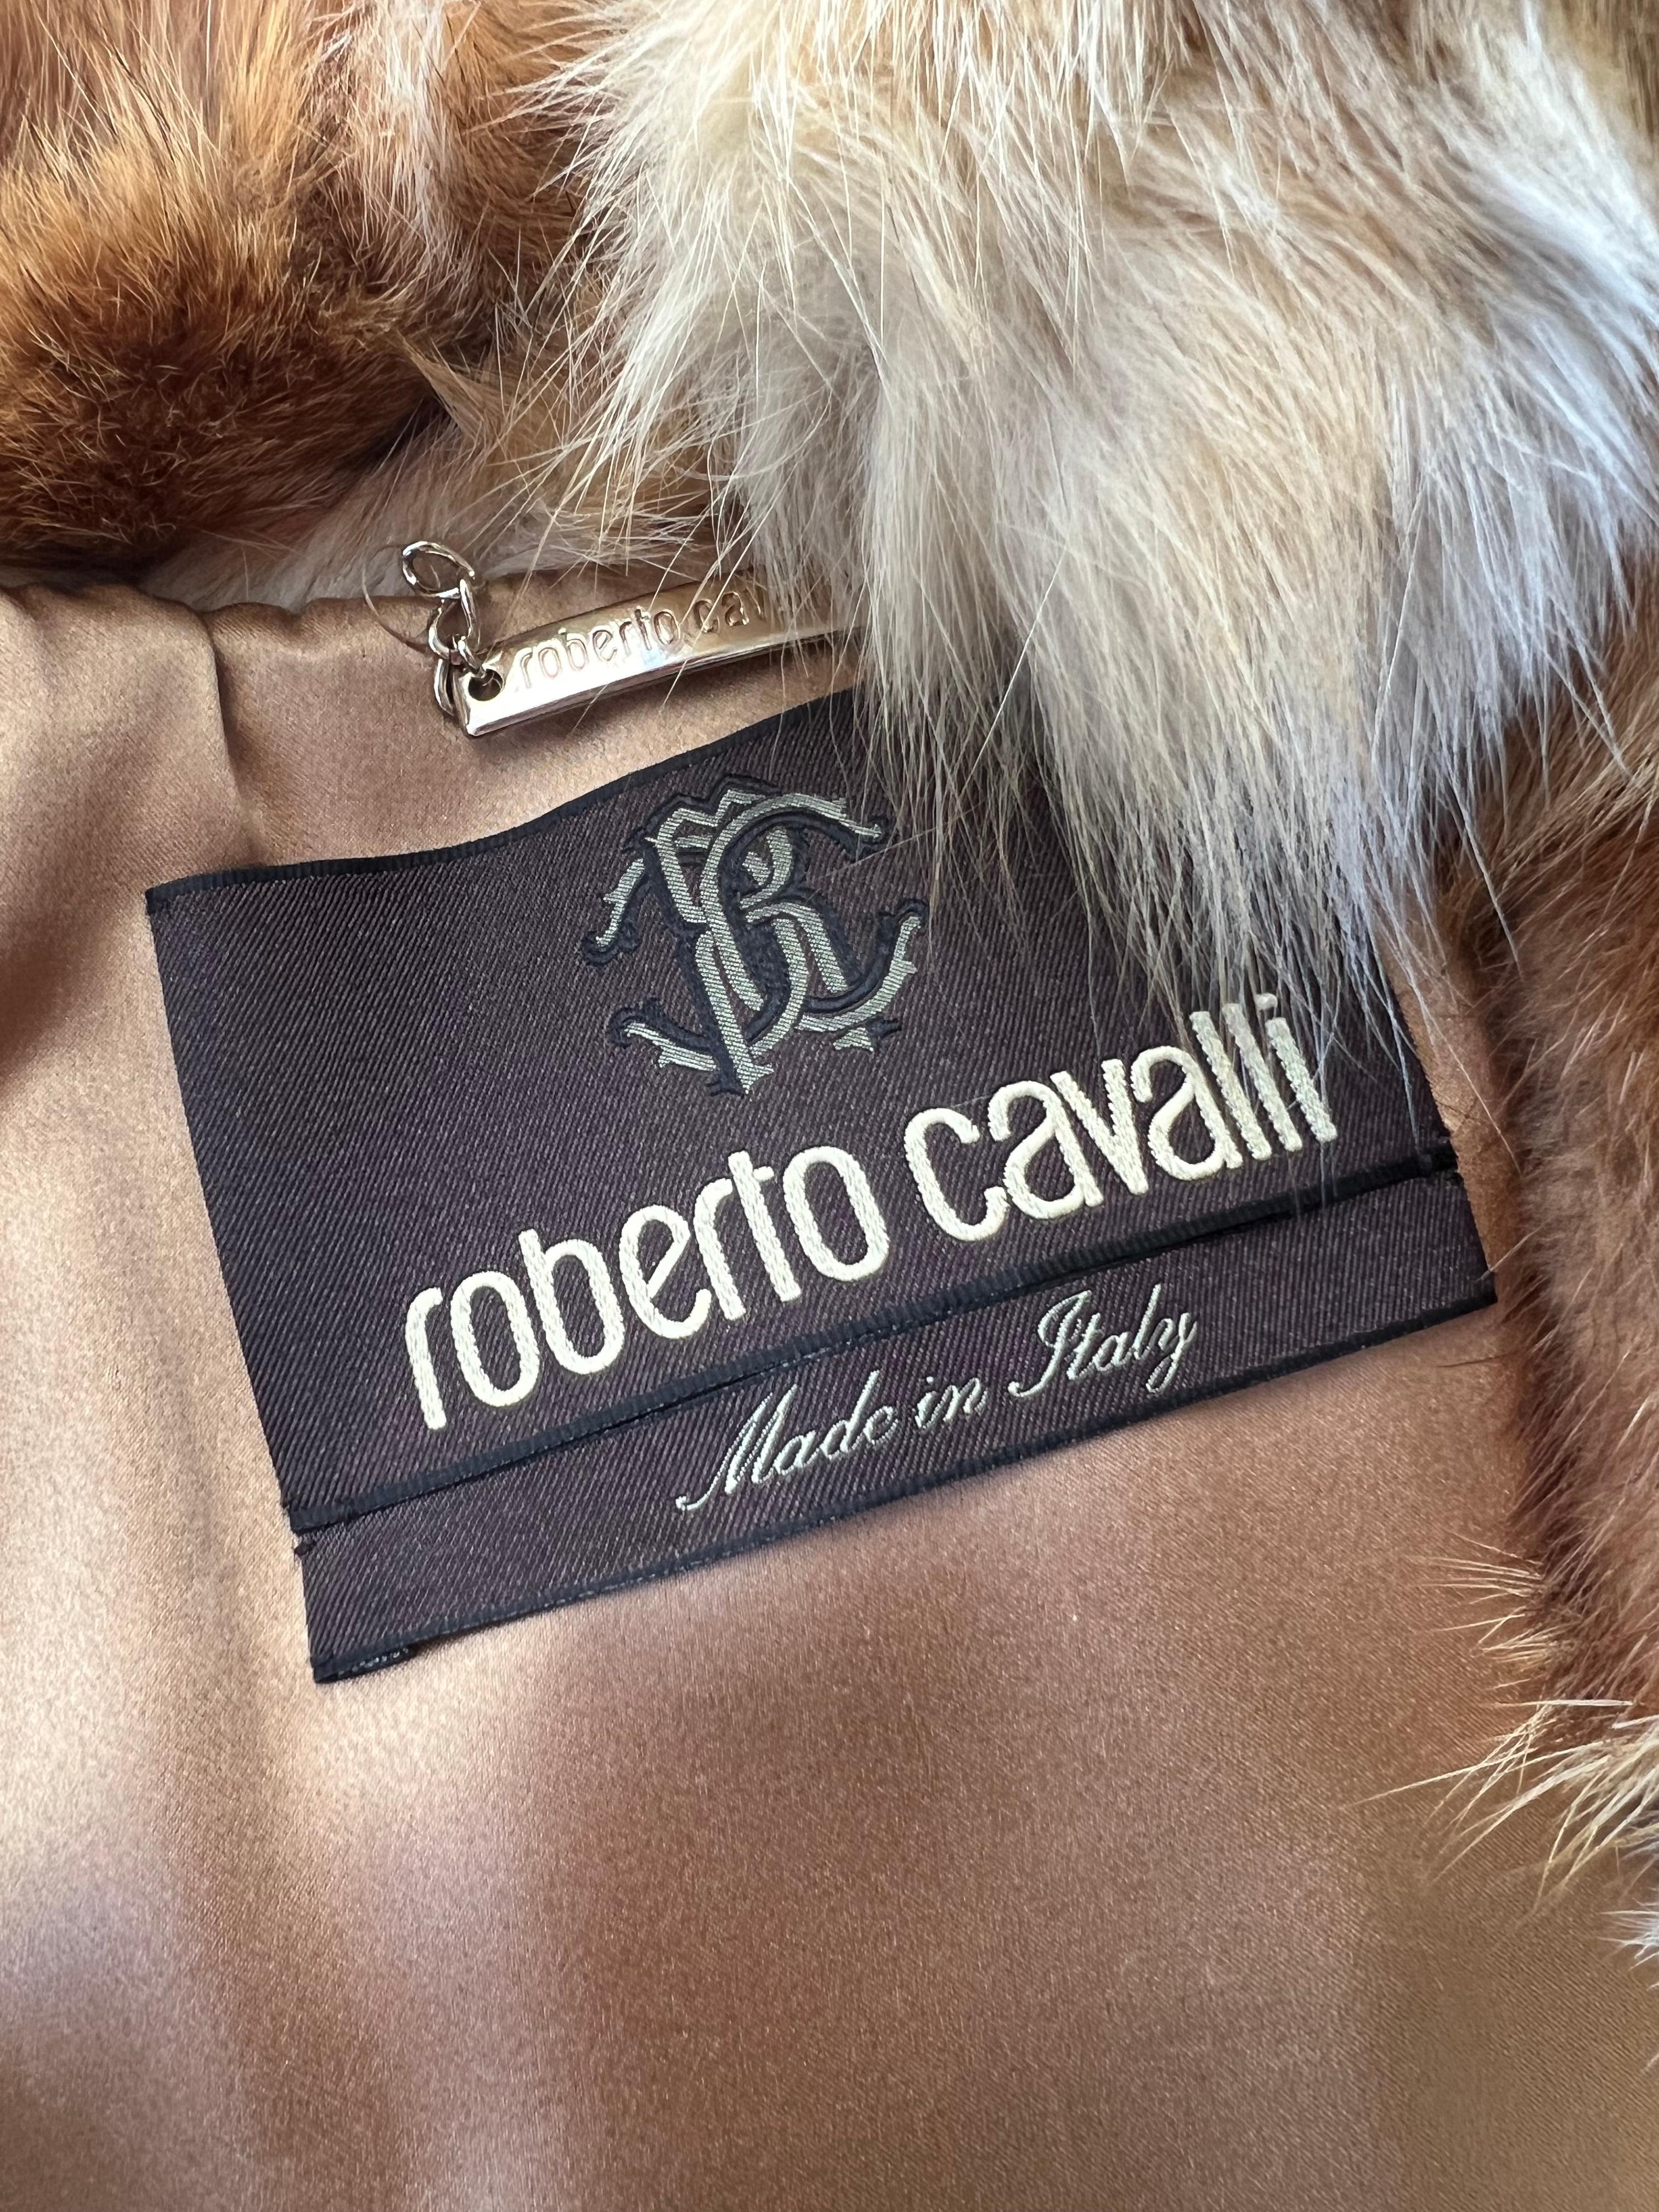 Roberto Cavalli Patchwork Fox Fur Coat  In Excellent Condition For Sale In Toronto, CA